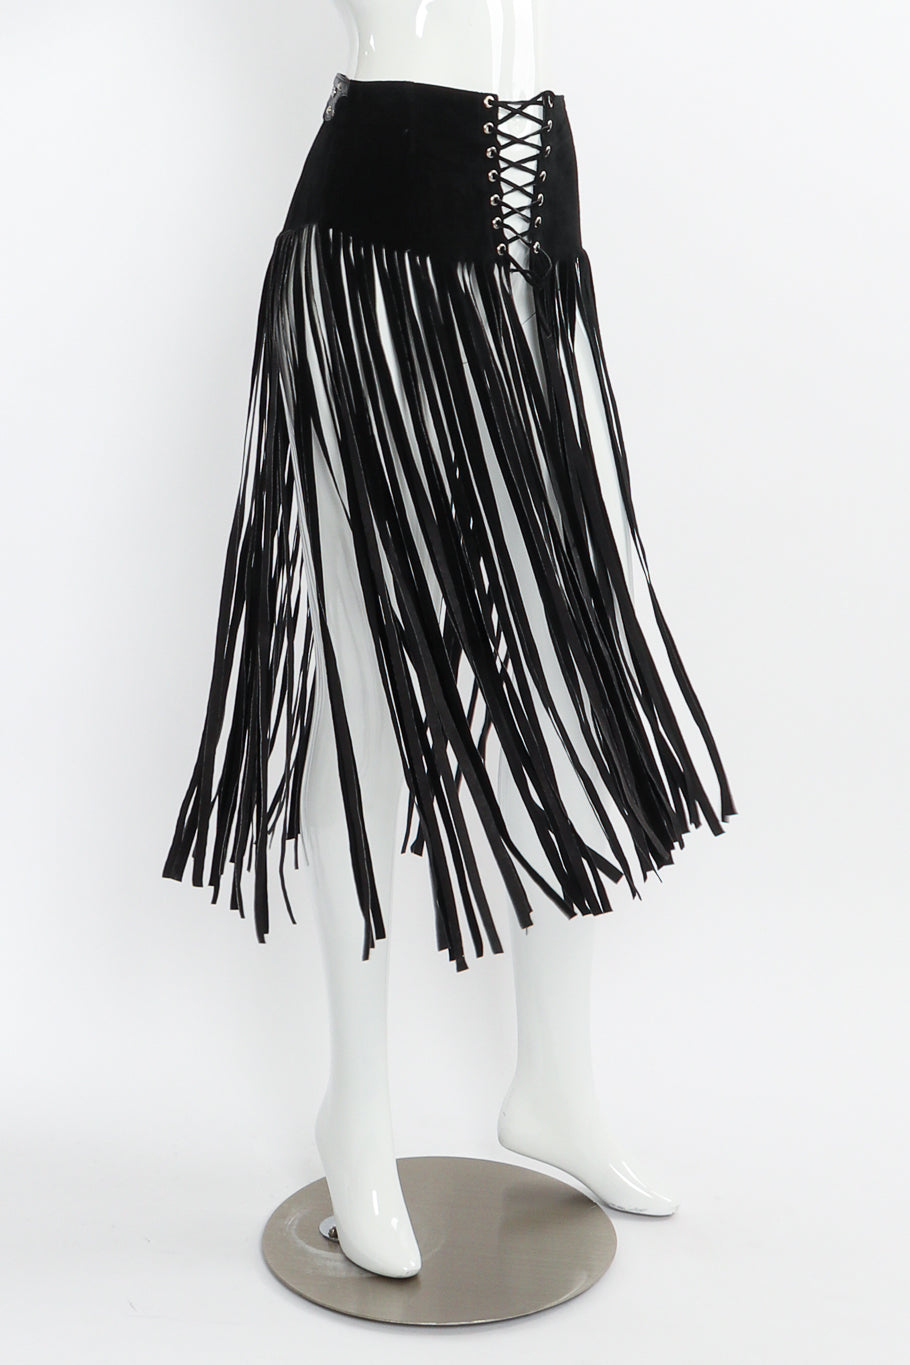 leather fringe belt skirt by Free Art Studio on mannequin front spinning @recessla